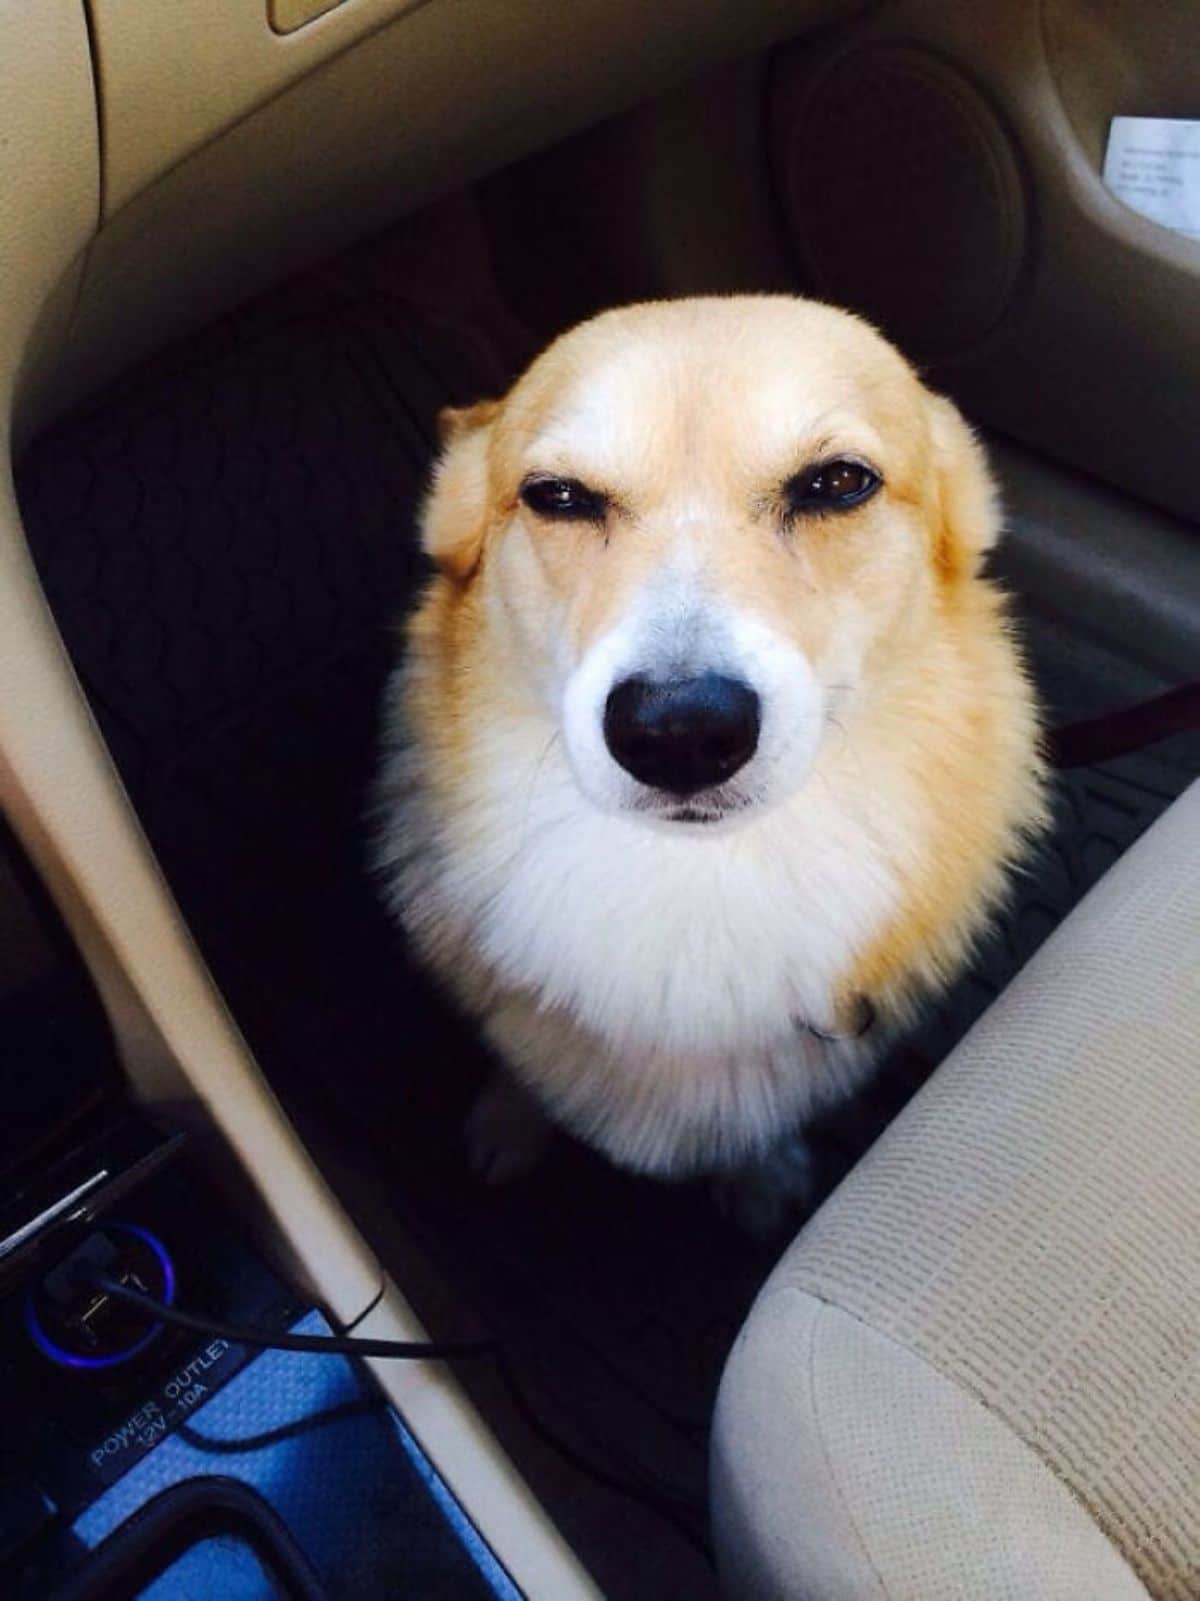 brown and white corgi dog narrowing its eyes